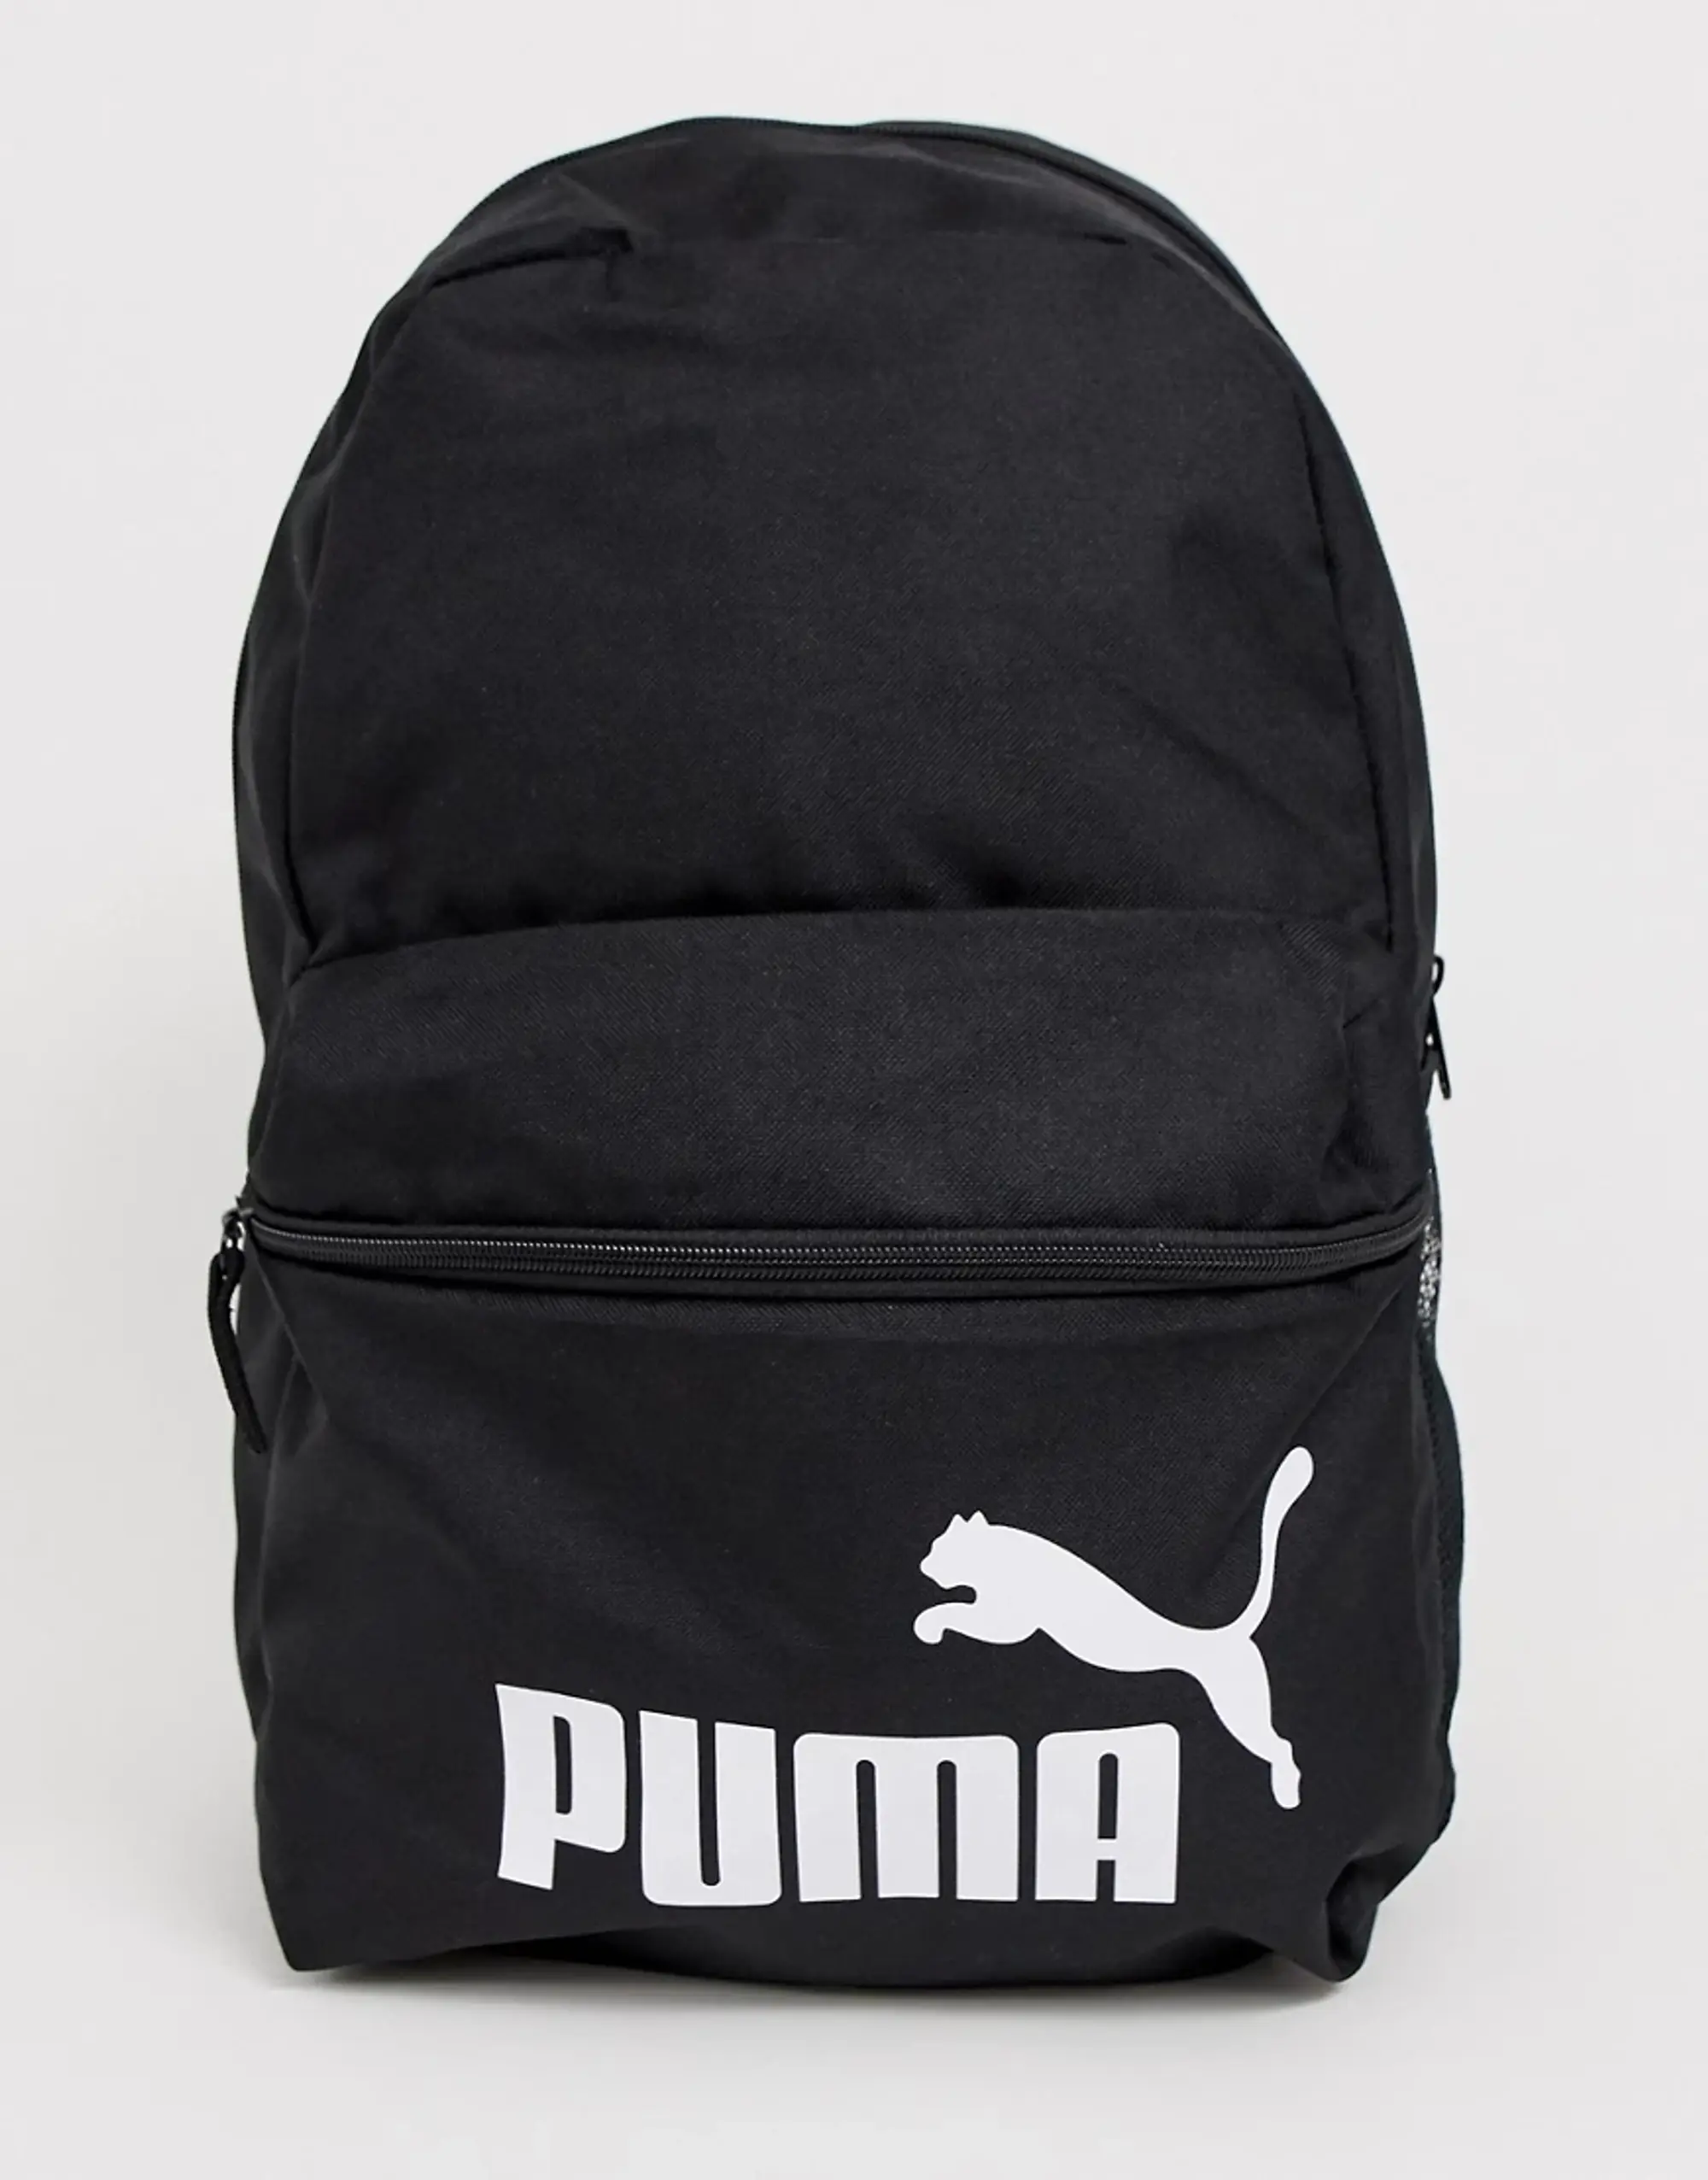 Puma Mens Phase Backpack - Black - One Size